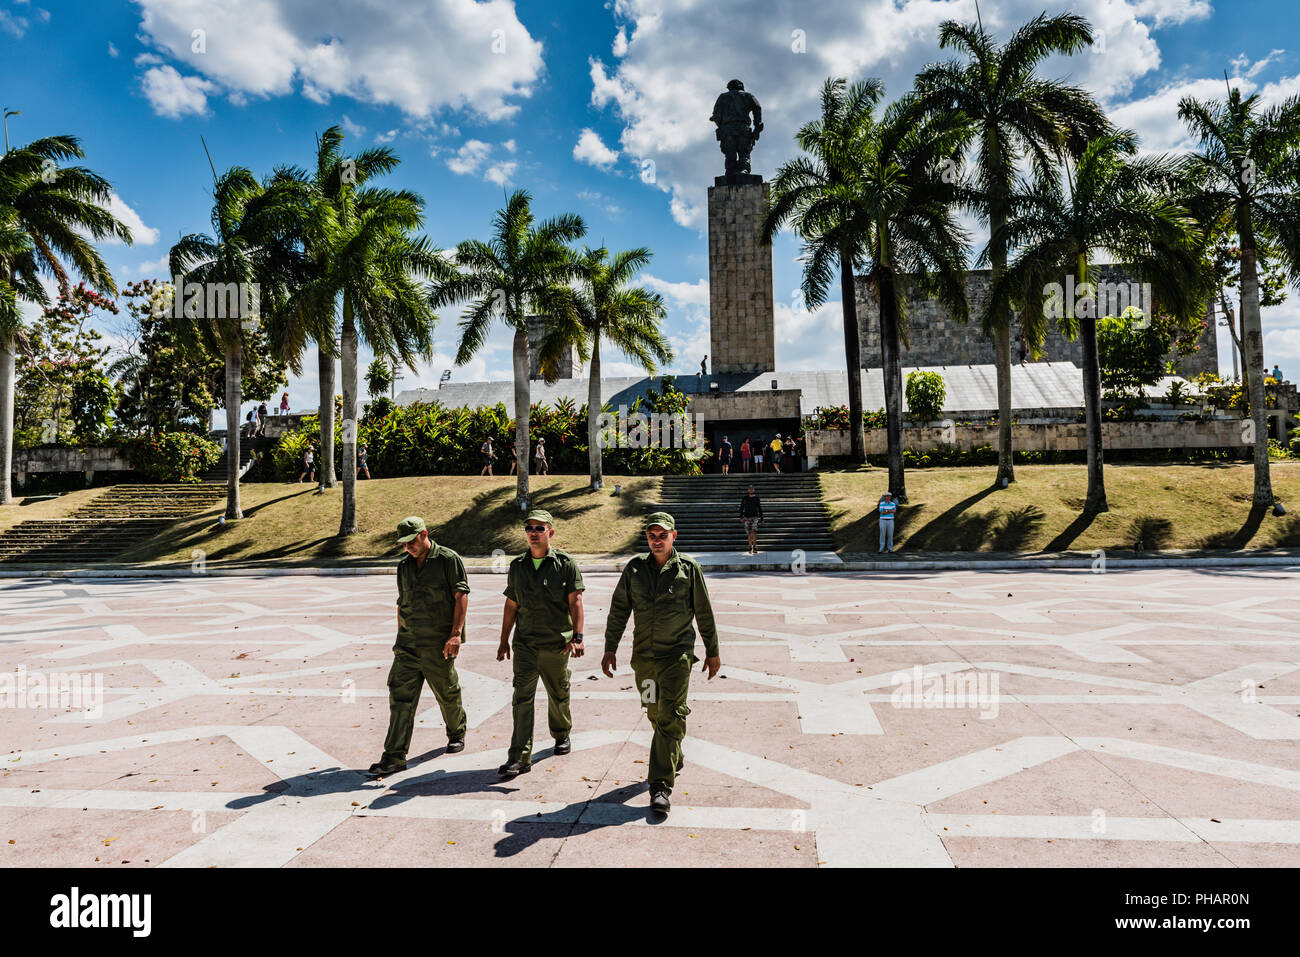 Santa Clara, Cuba / March 16, 2016: Three Cuban soldiers in green fatigues crossing plaza at the Che Guevara Mausoleum. Stock Photo